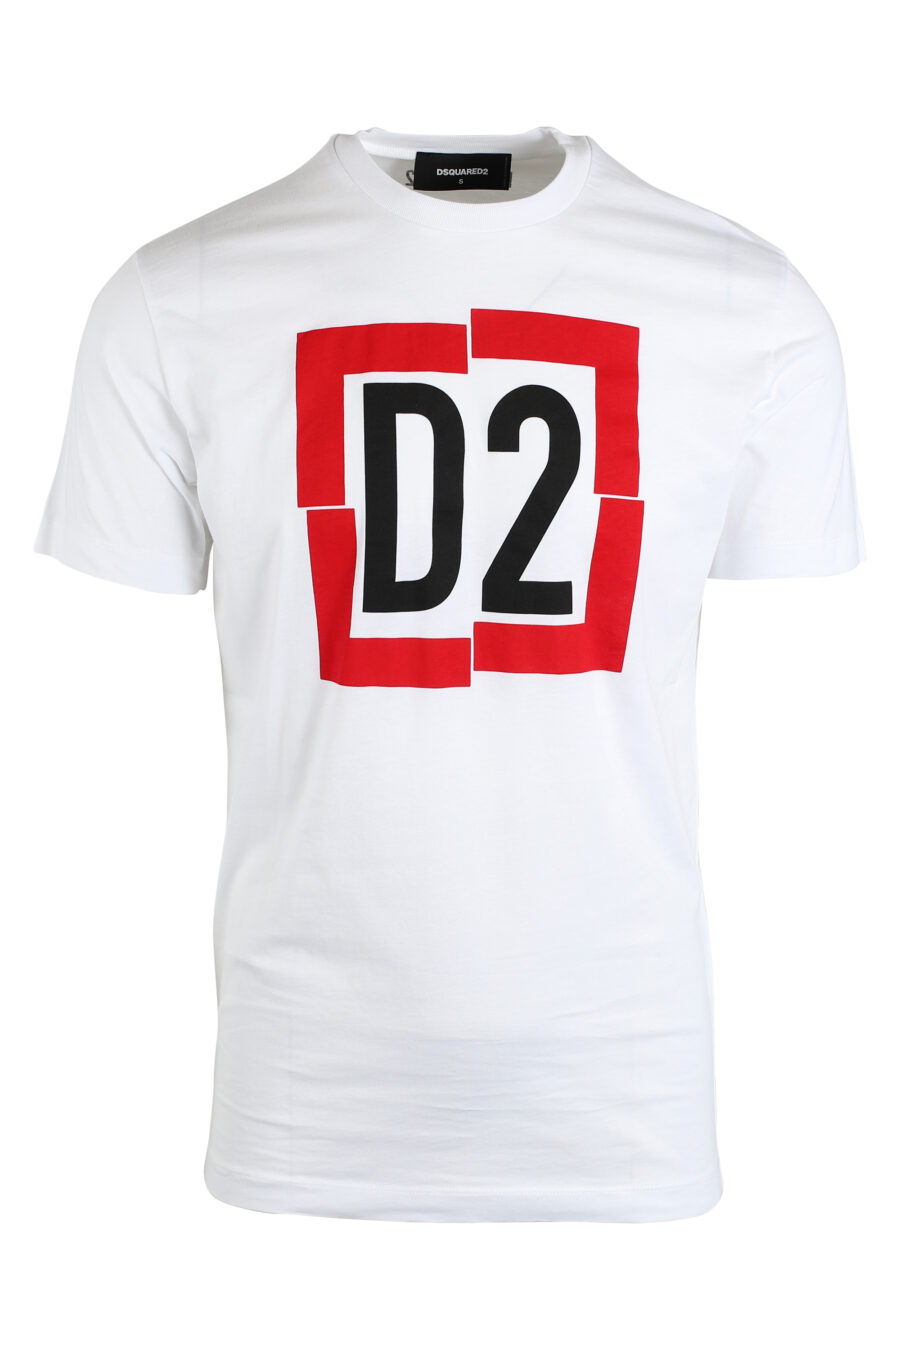 Camiseta blanca con maxilogo "d2" en cuadro rojo - IMG 0674